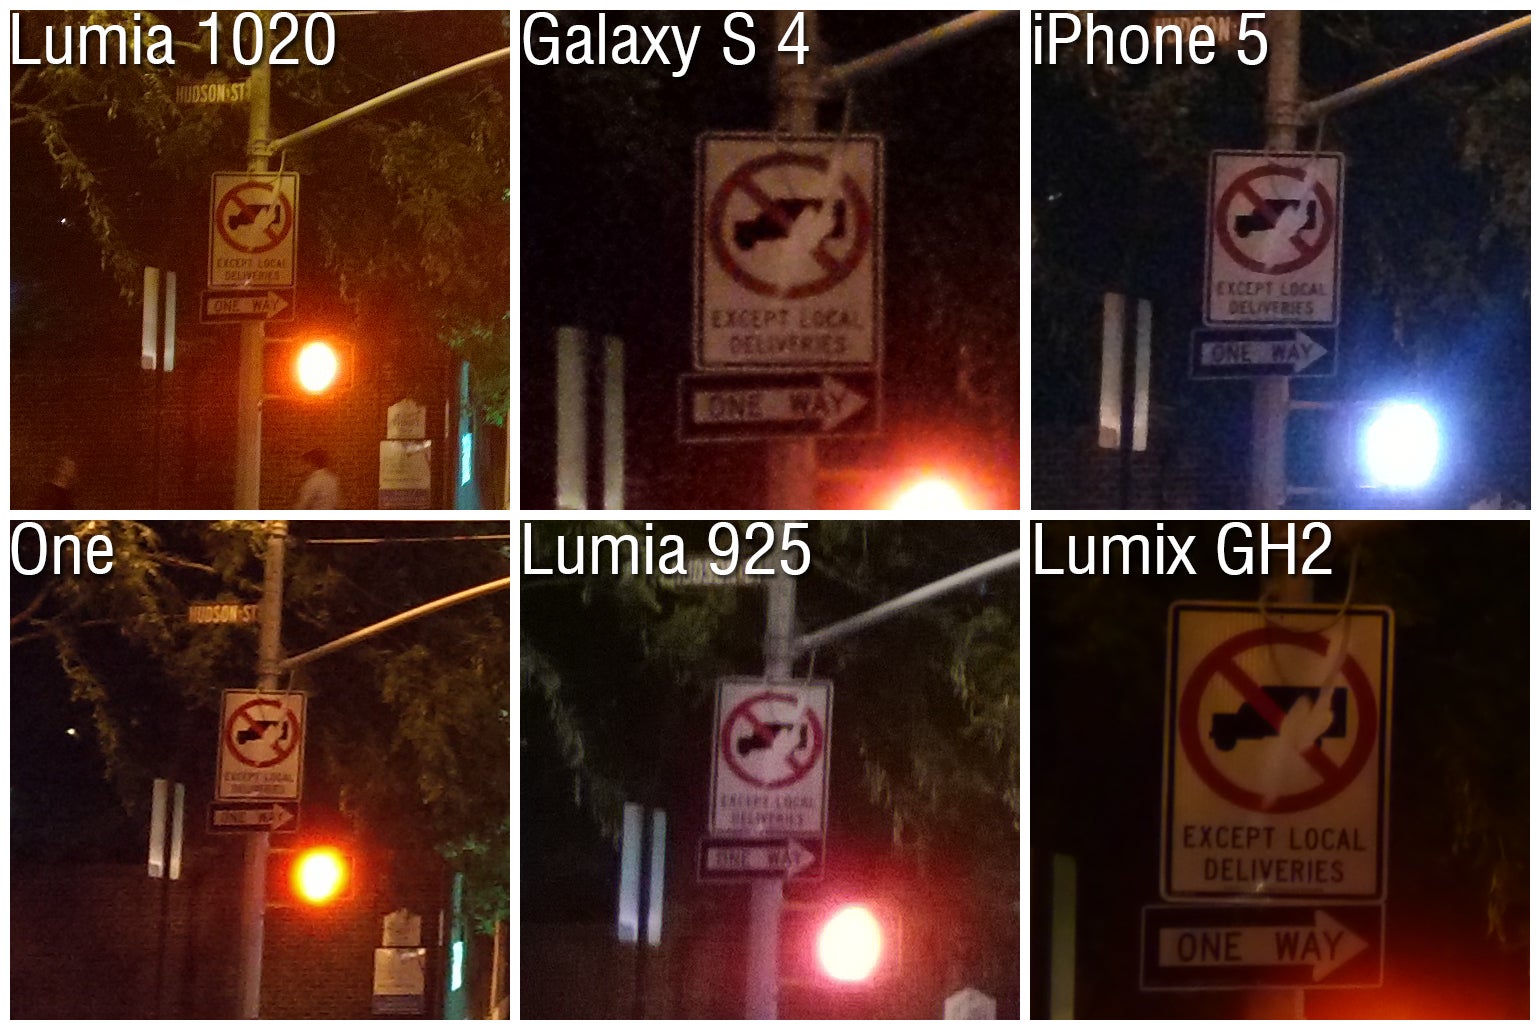 Camera Comparison: Nokia Lumia 1020 vs Galaxy S4, iPhone 5, Lumia 925, One